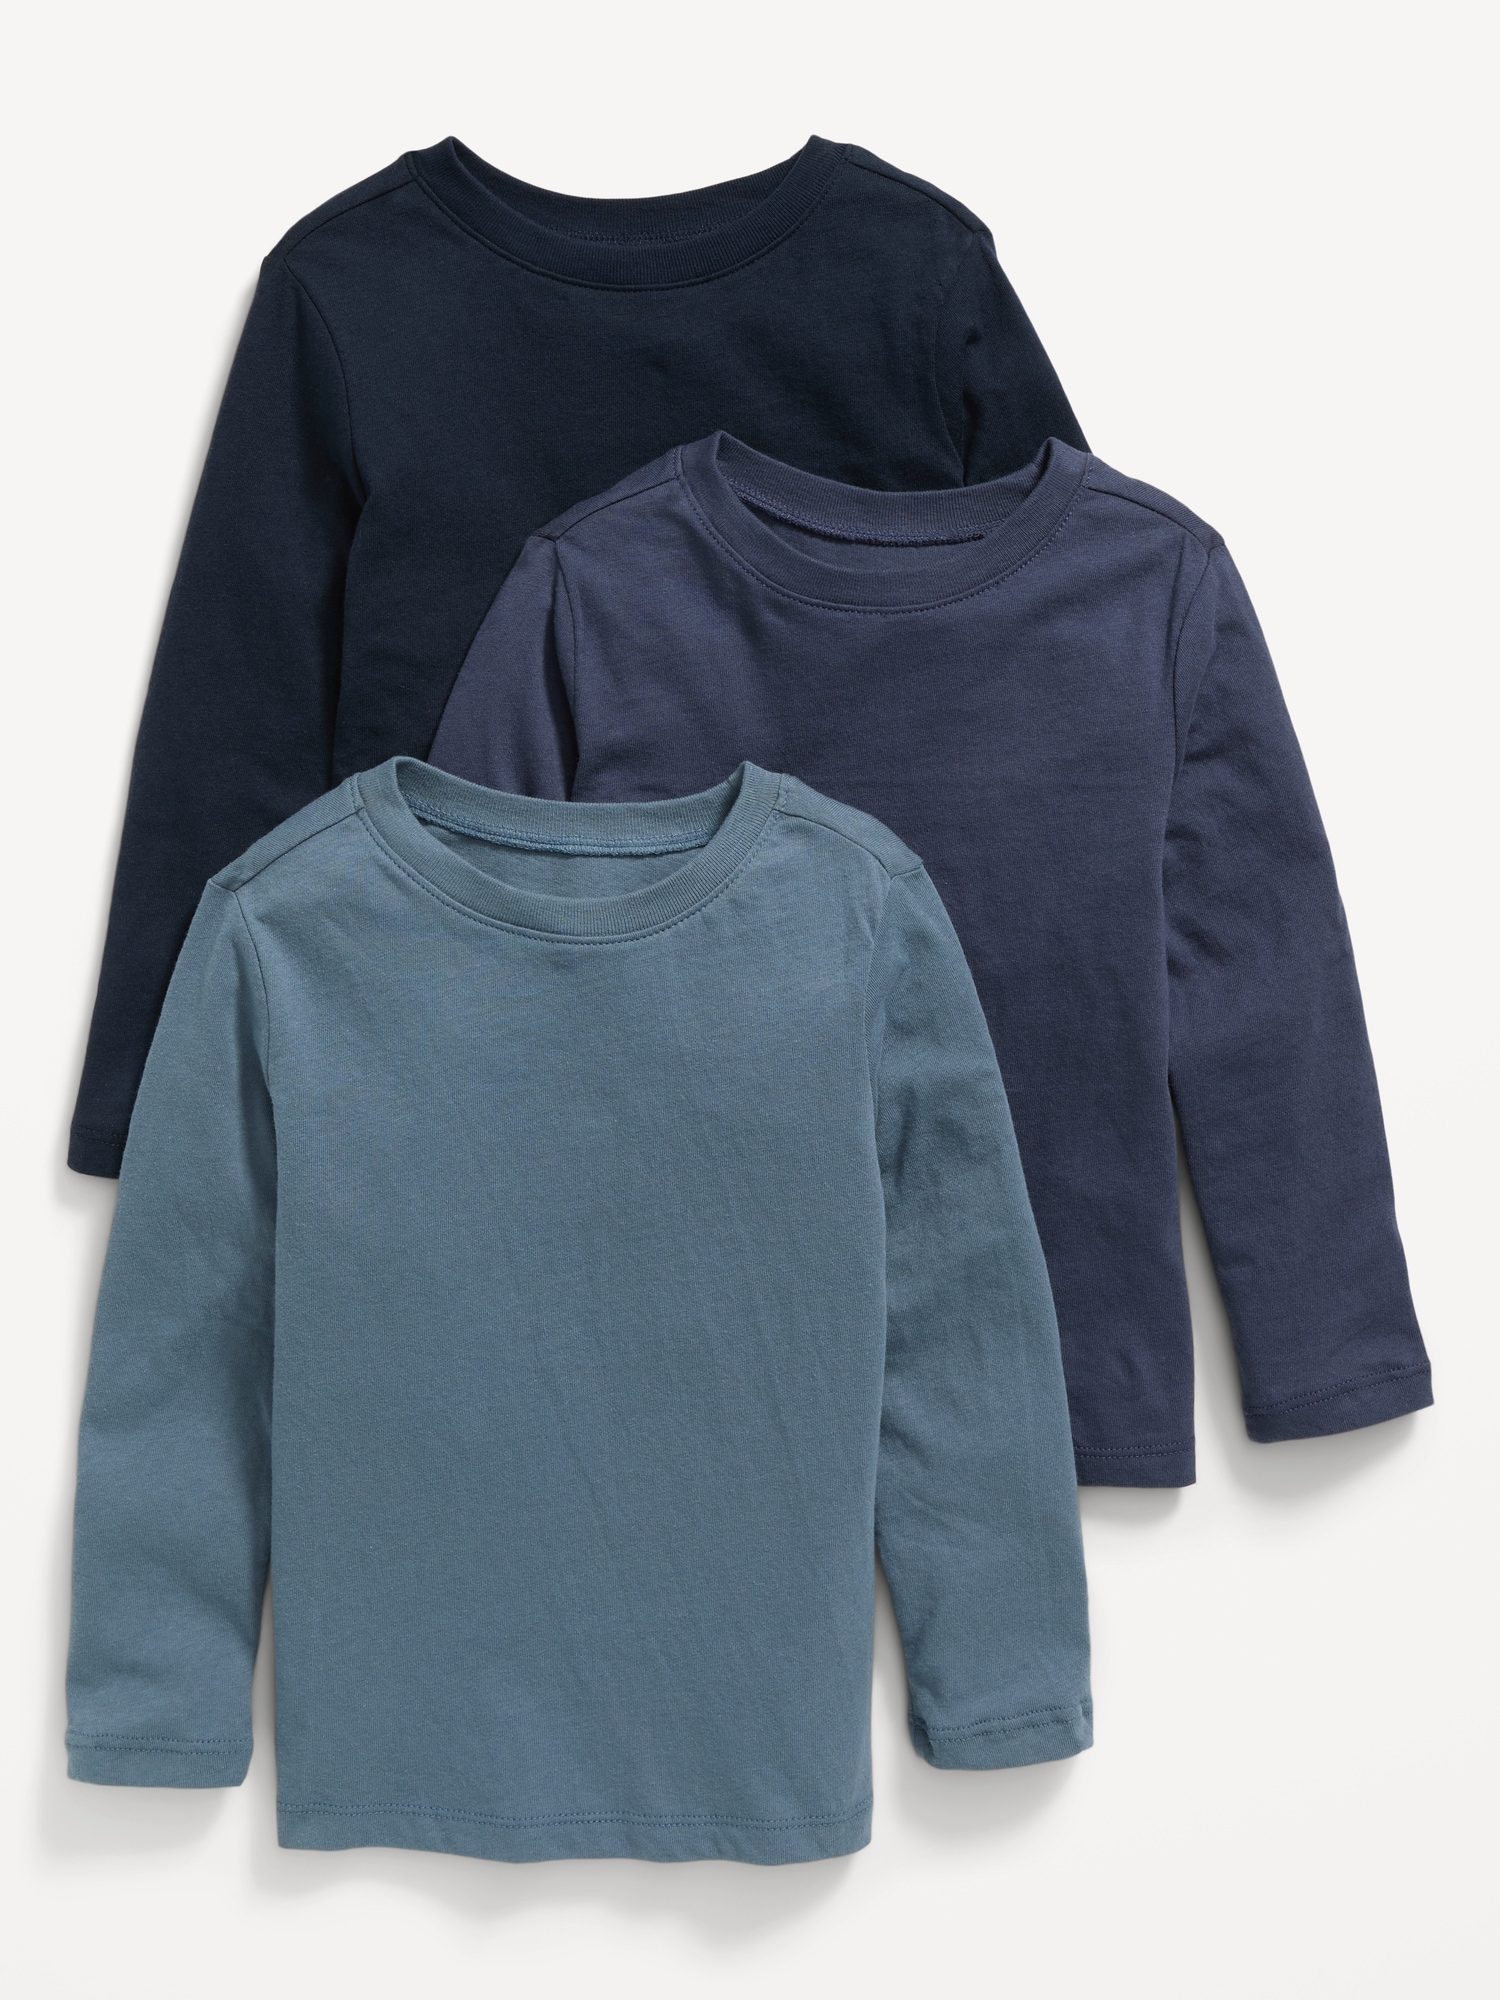 Unisex Long-Sleeve T-Shirt 3-Pack for Toddler | Old Navy